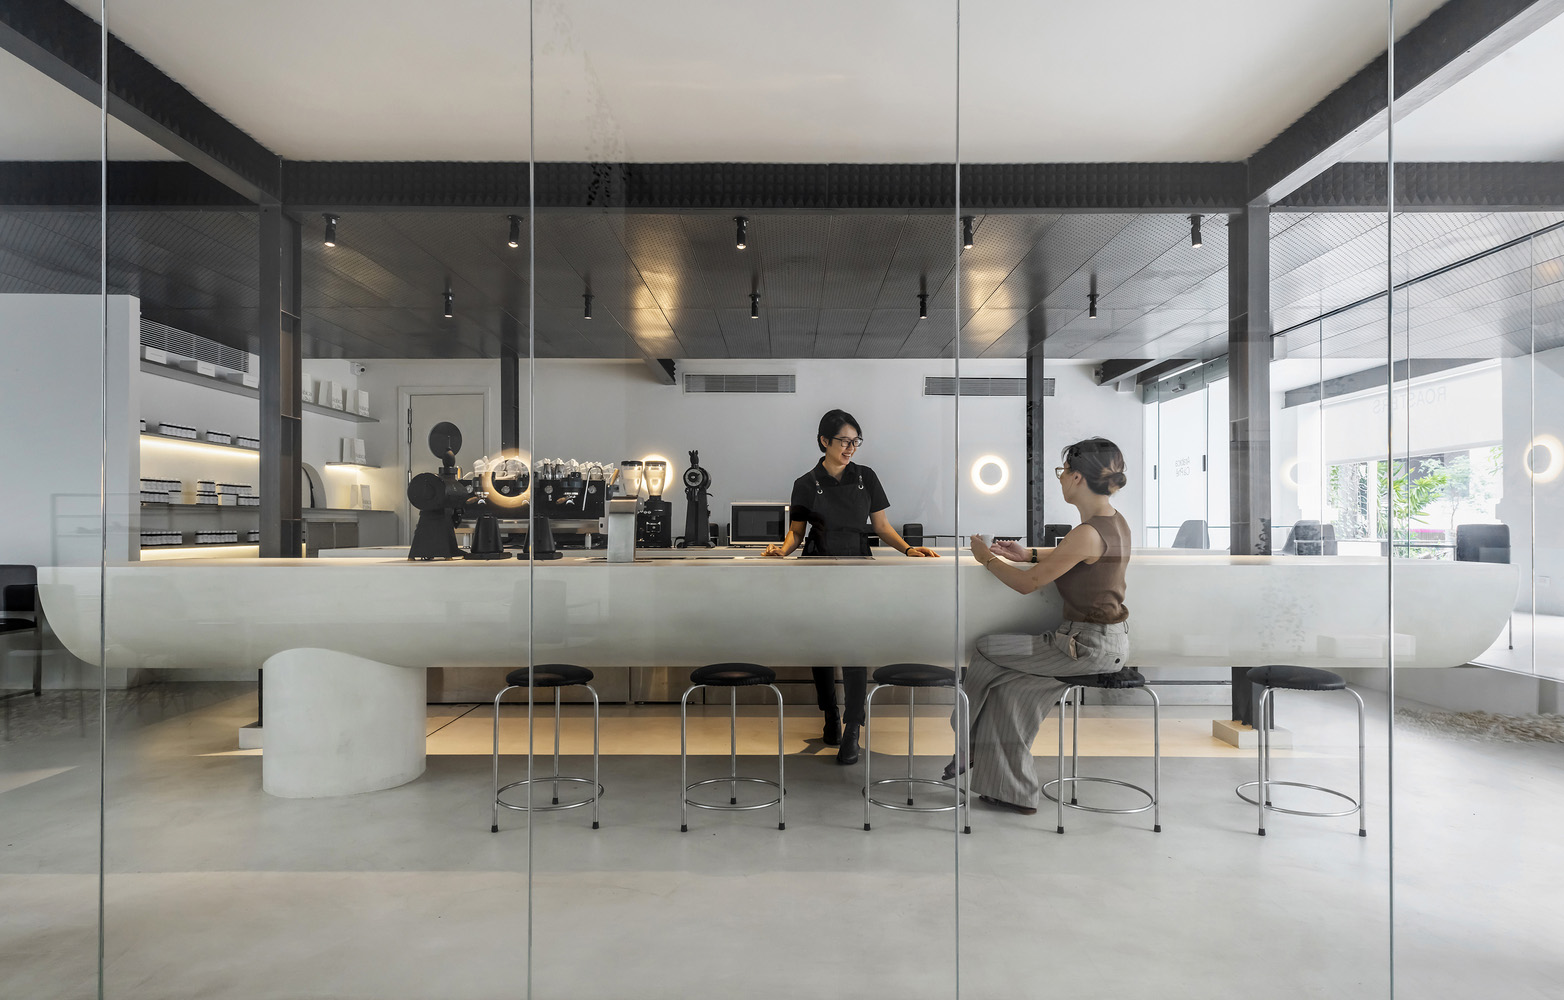 NU architecture & design,越南,胡誌明市,咖啡廳設計方案,咖啡廳裝修,街邊店設計,咖啡店設計,社區咖啡店設計,Bosgaurus Coffee